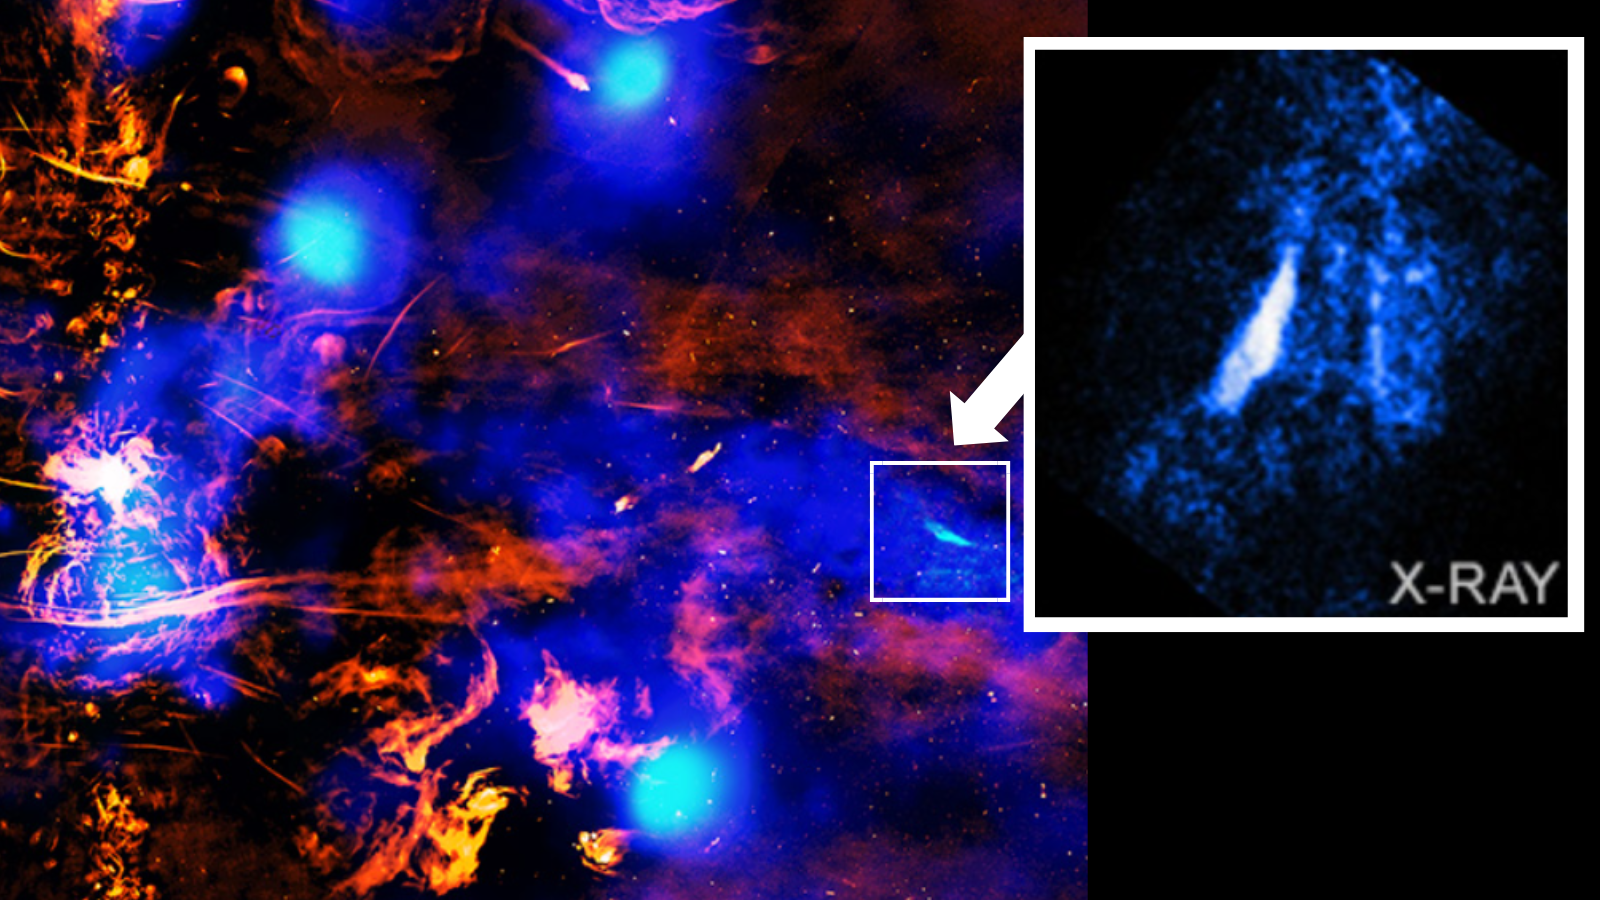  NASA's Chandra spacecraft spots supermassive black hole erupting in the Milky Way's heart 